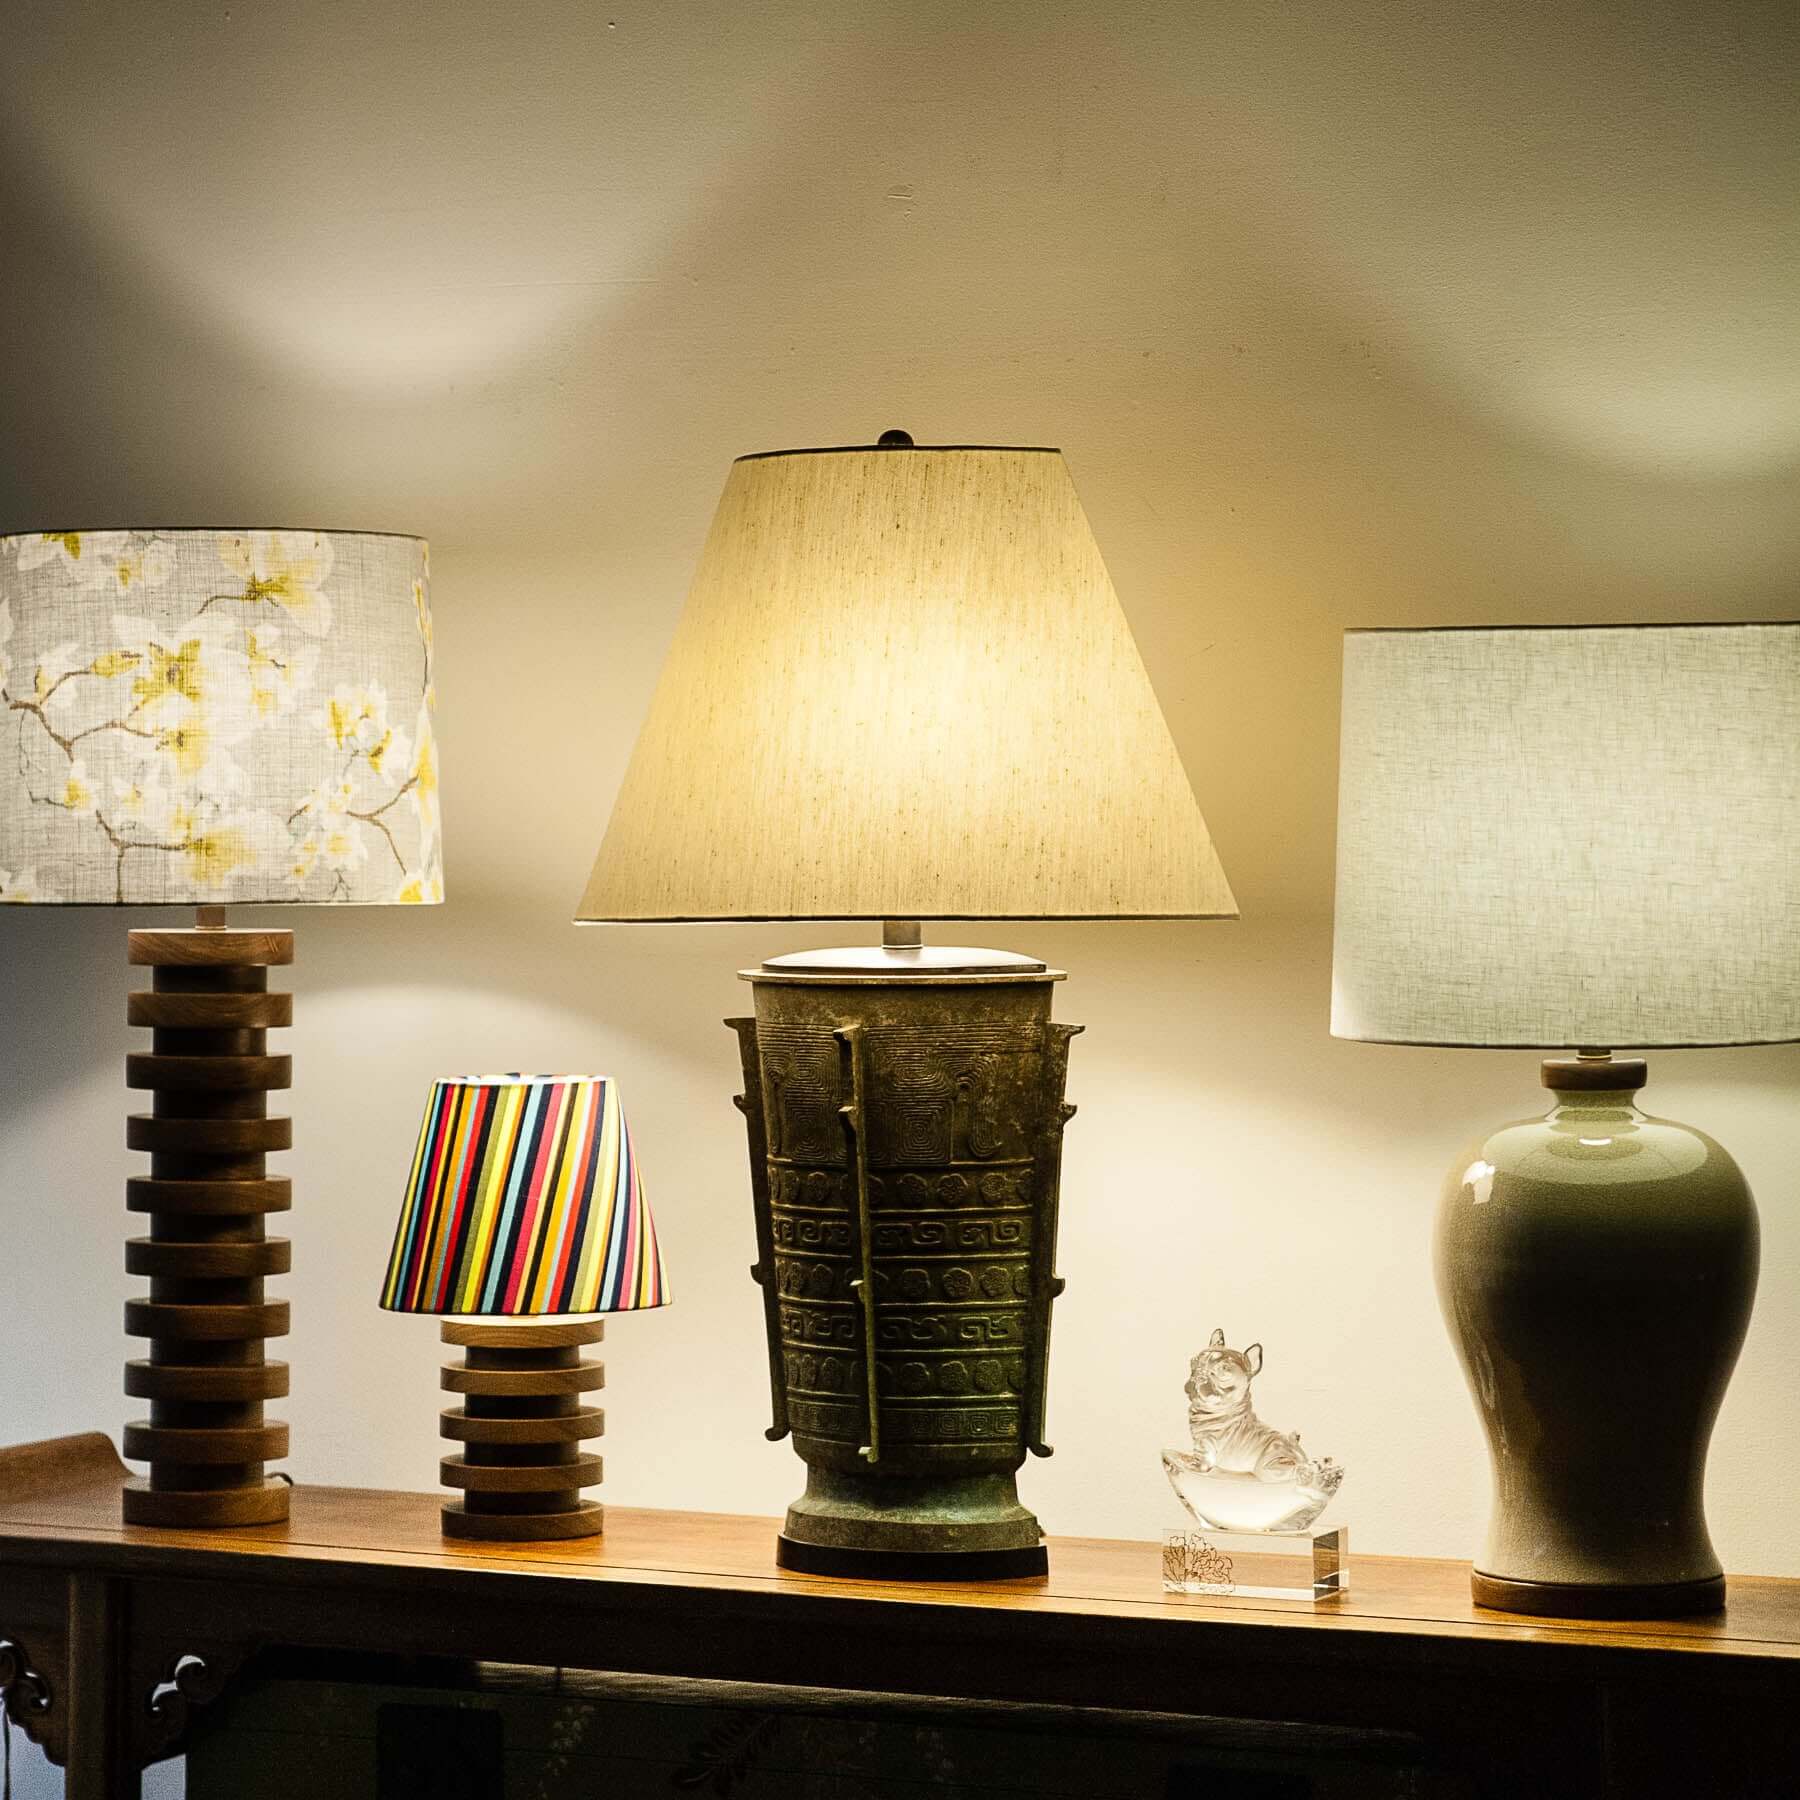 Lawrence & Scott Handmade Lamp Shades